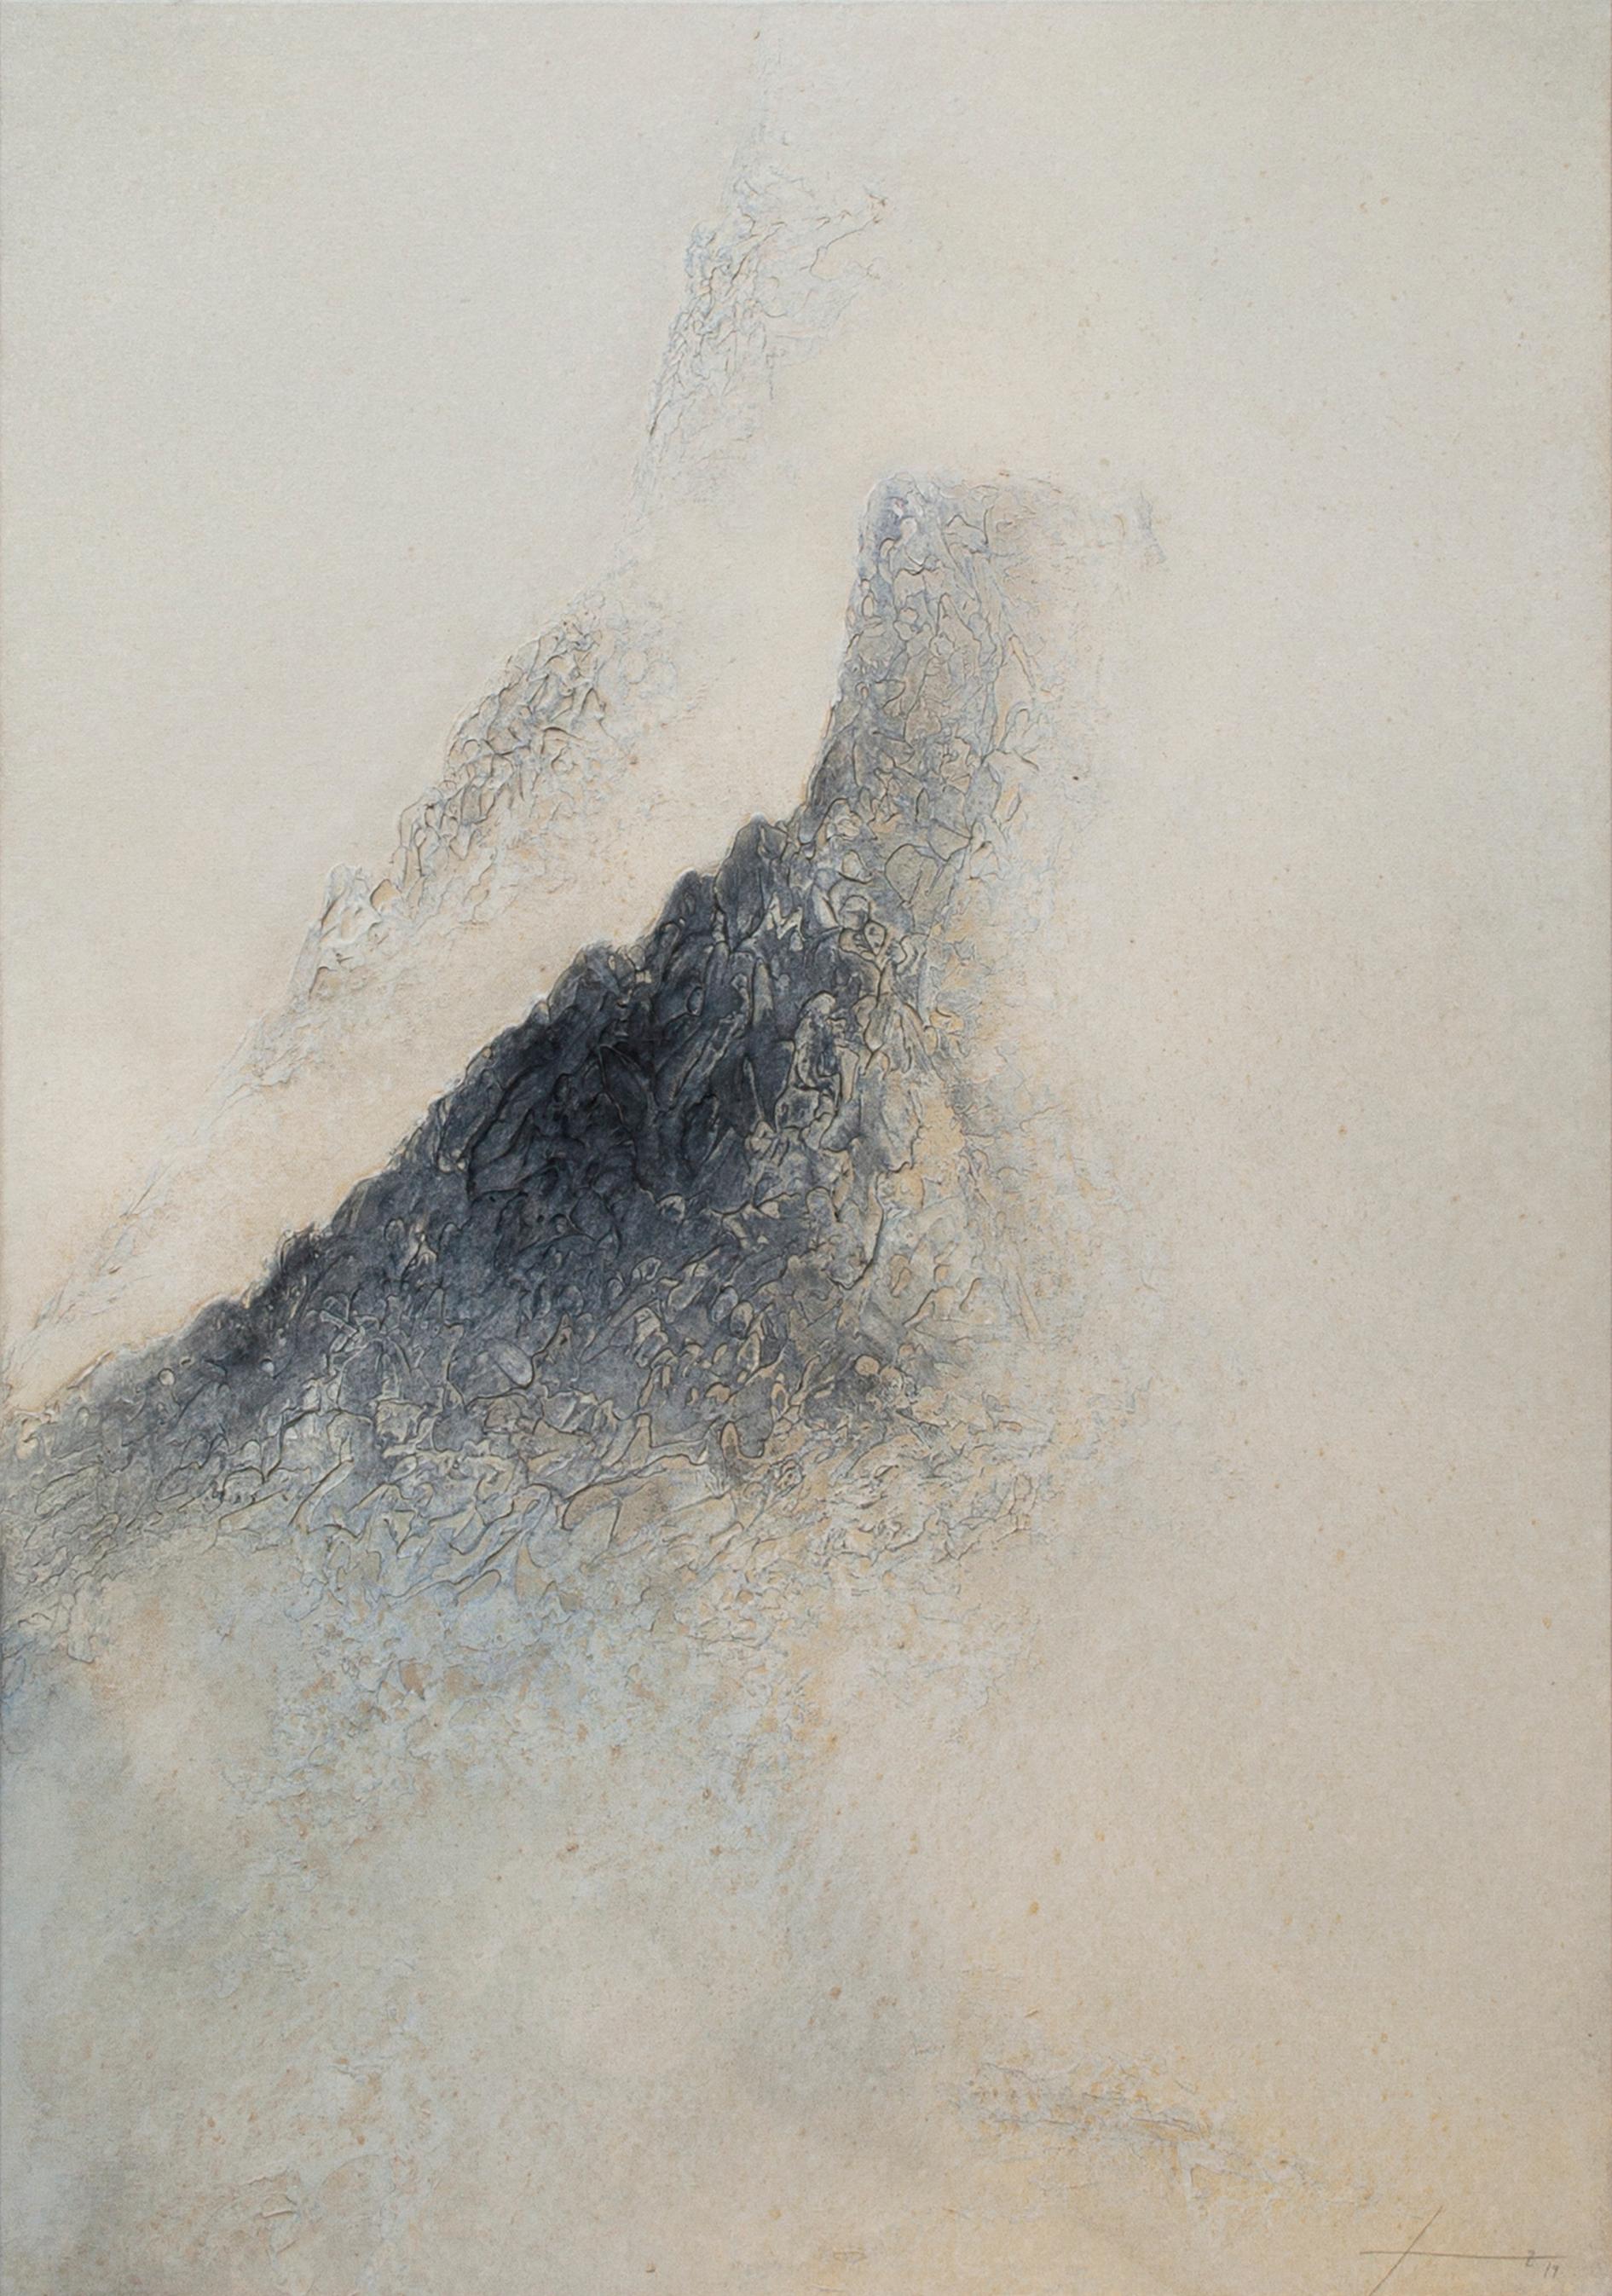 Black Mountains XVI - 21e siècle, contemporain, peinture abstraite, paysage